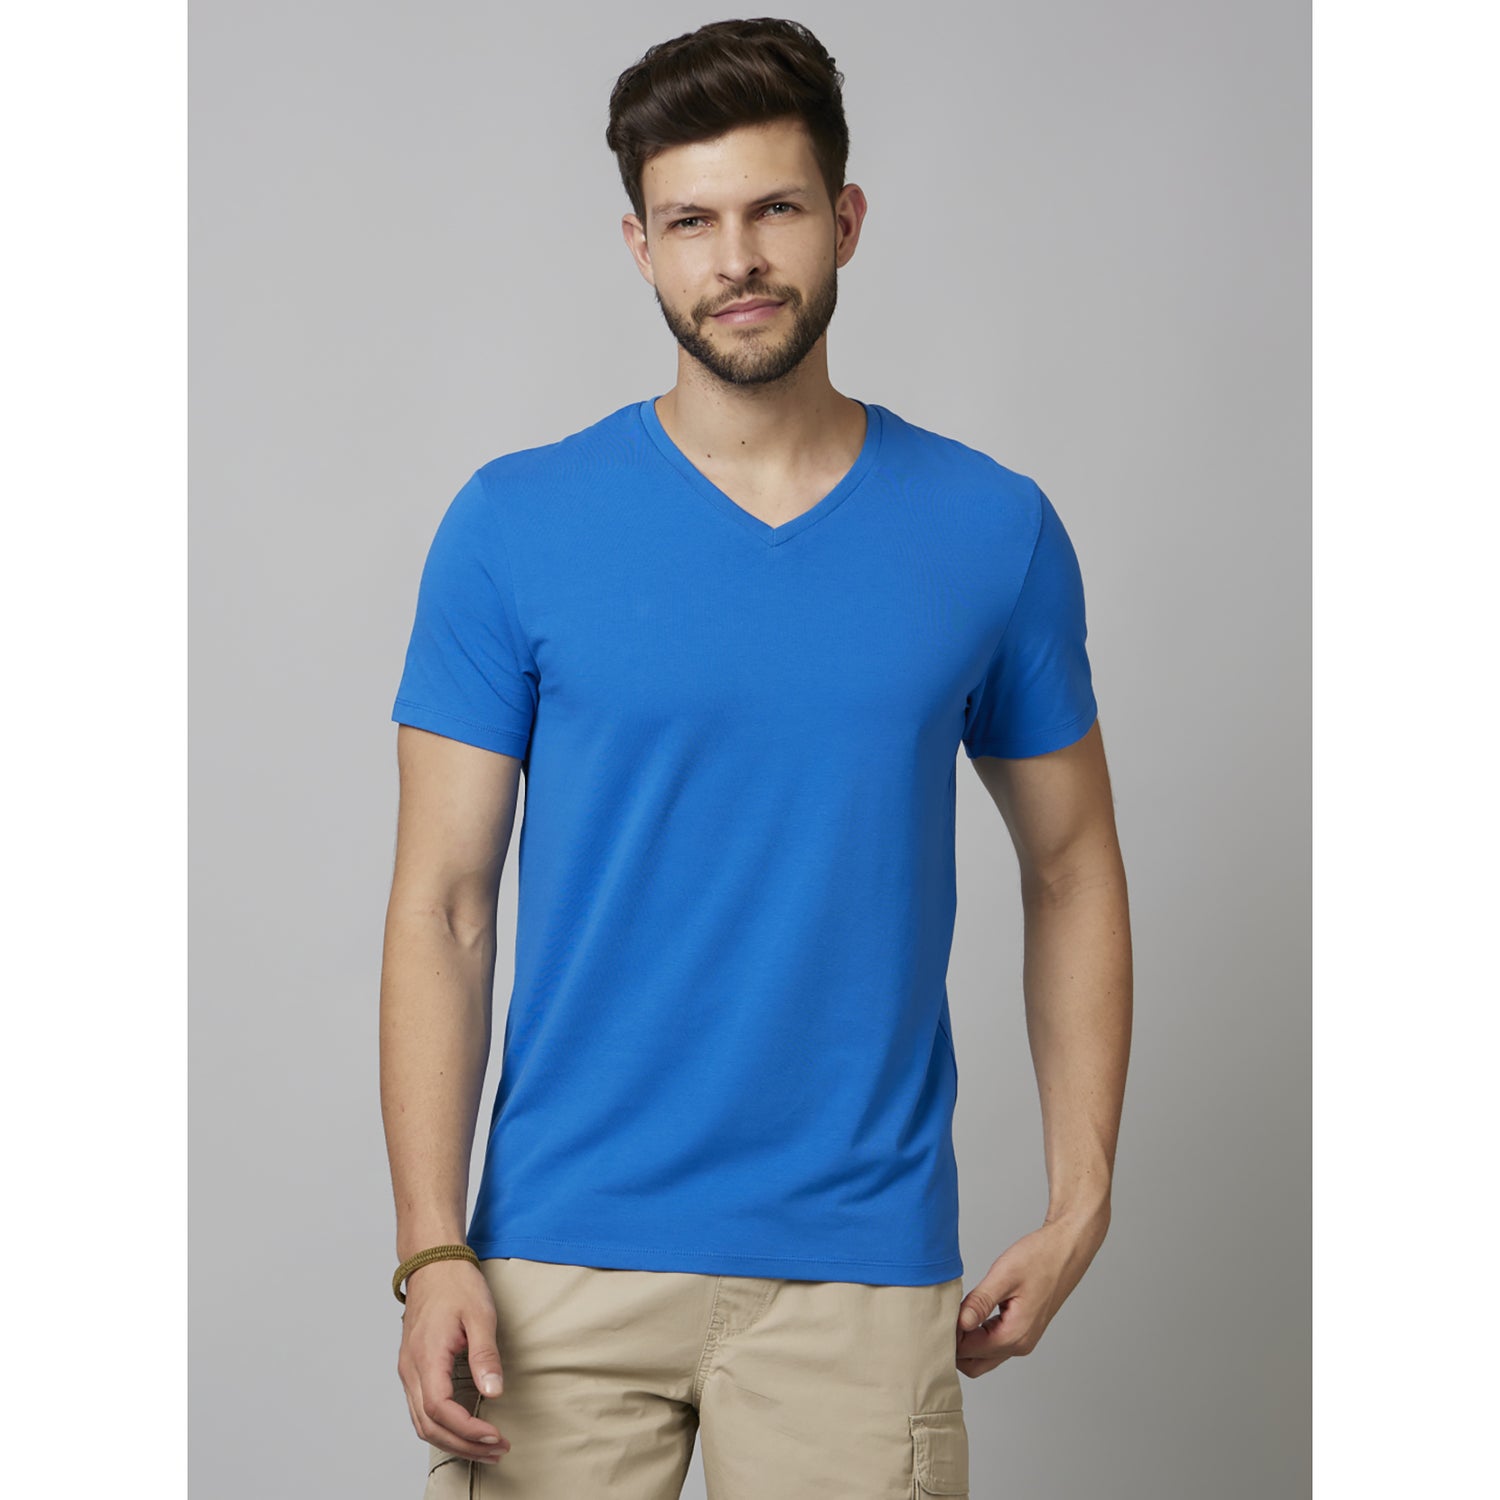 Blue Solid Half Sleeve Cotton Blend T-Shirts (NEUNIV1)